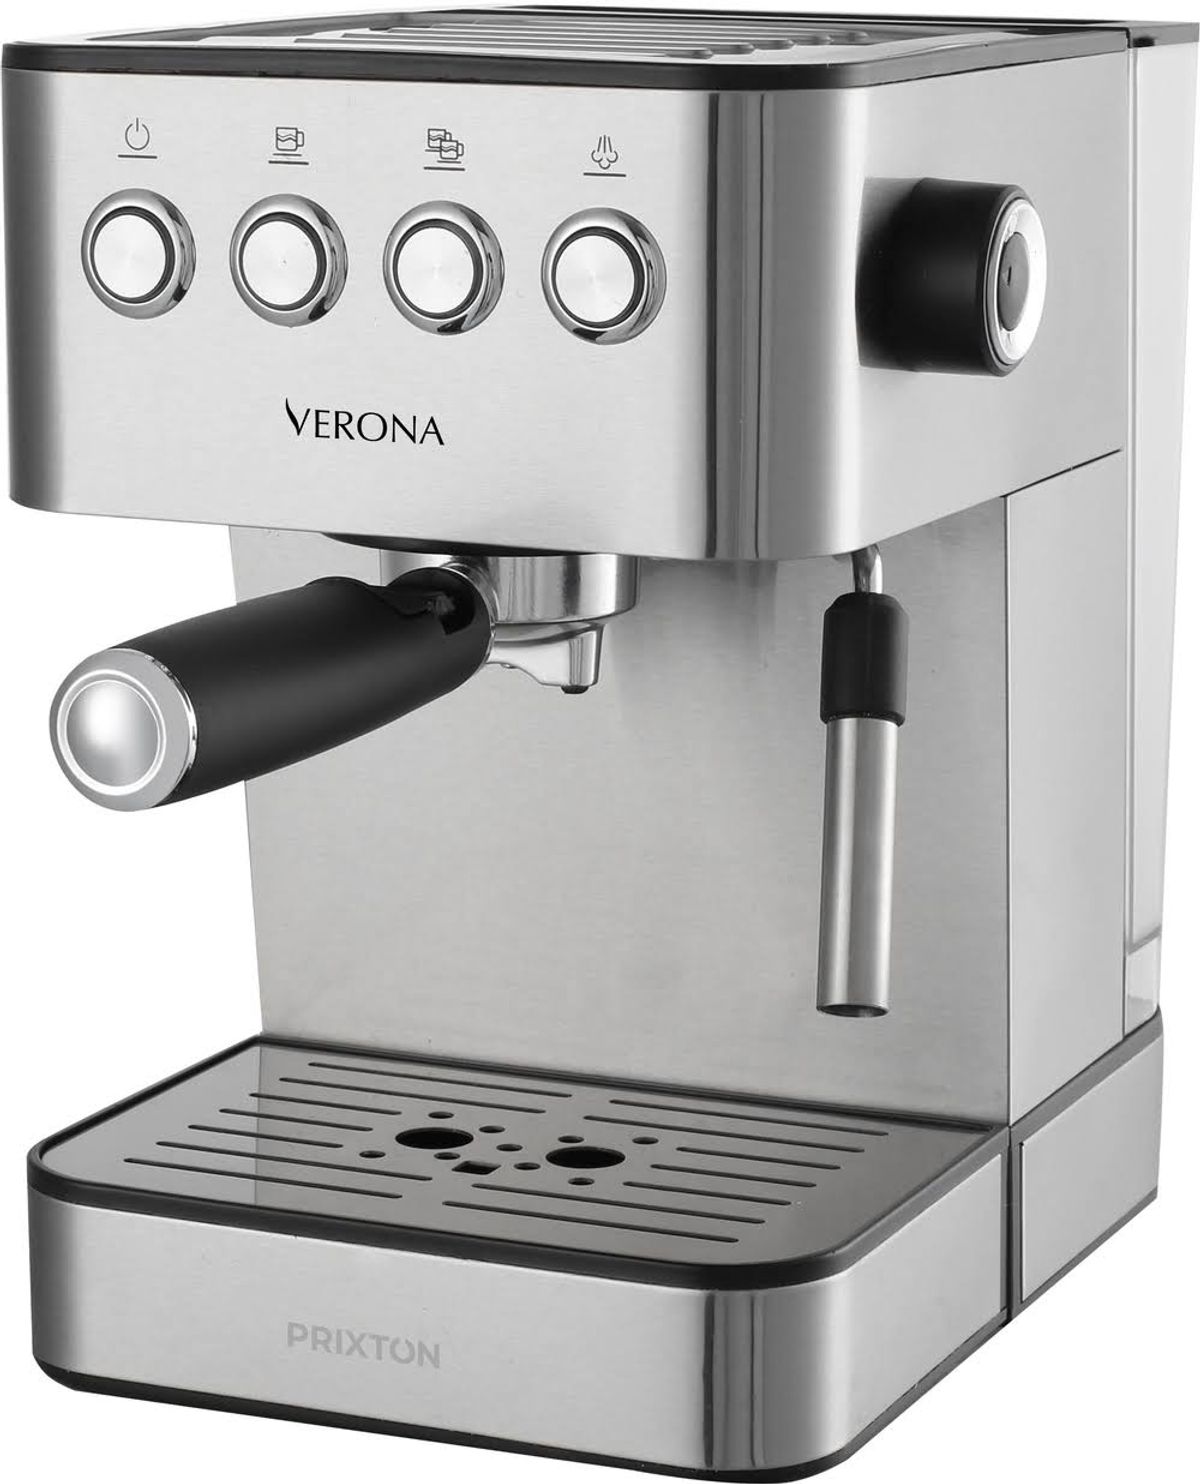 PRIXTON Verona Silber Kaffeemaschine